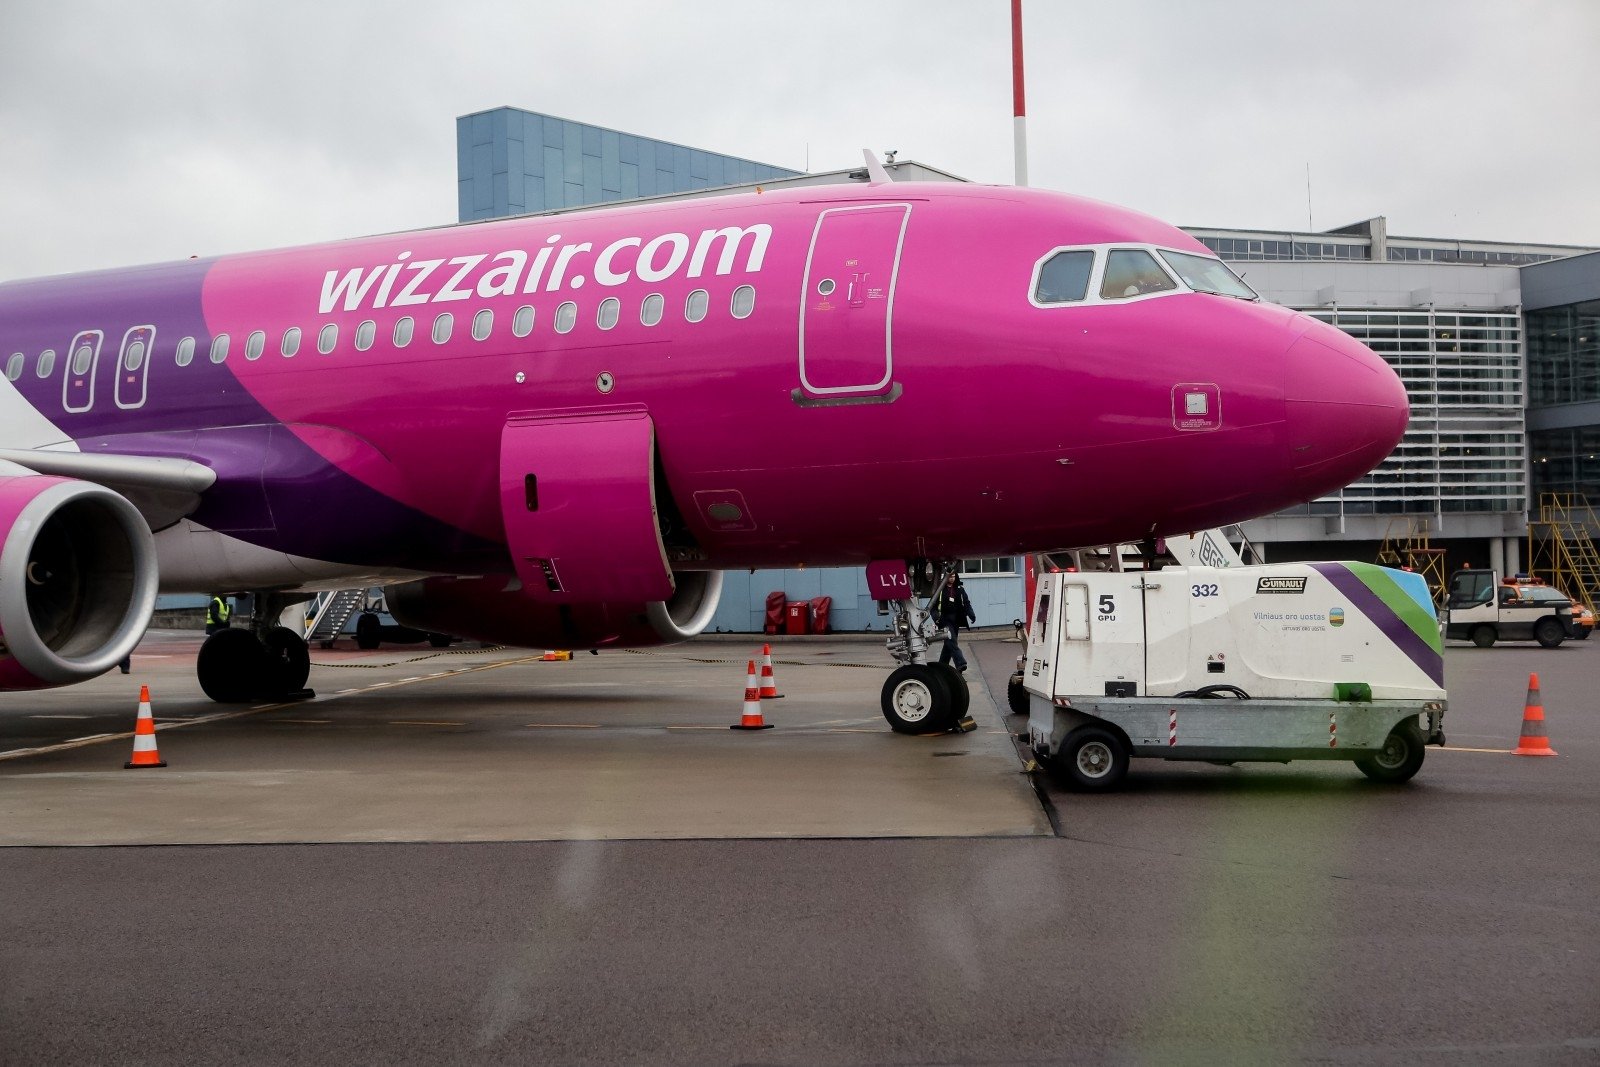 Авиакомпания wizzair. Венгерская авиакомпания Wizzair. Самолет Wizz. Самолеты Визз Эйр. Wizz Air самолеты компании.